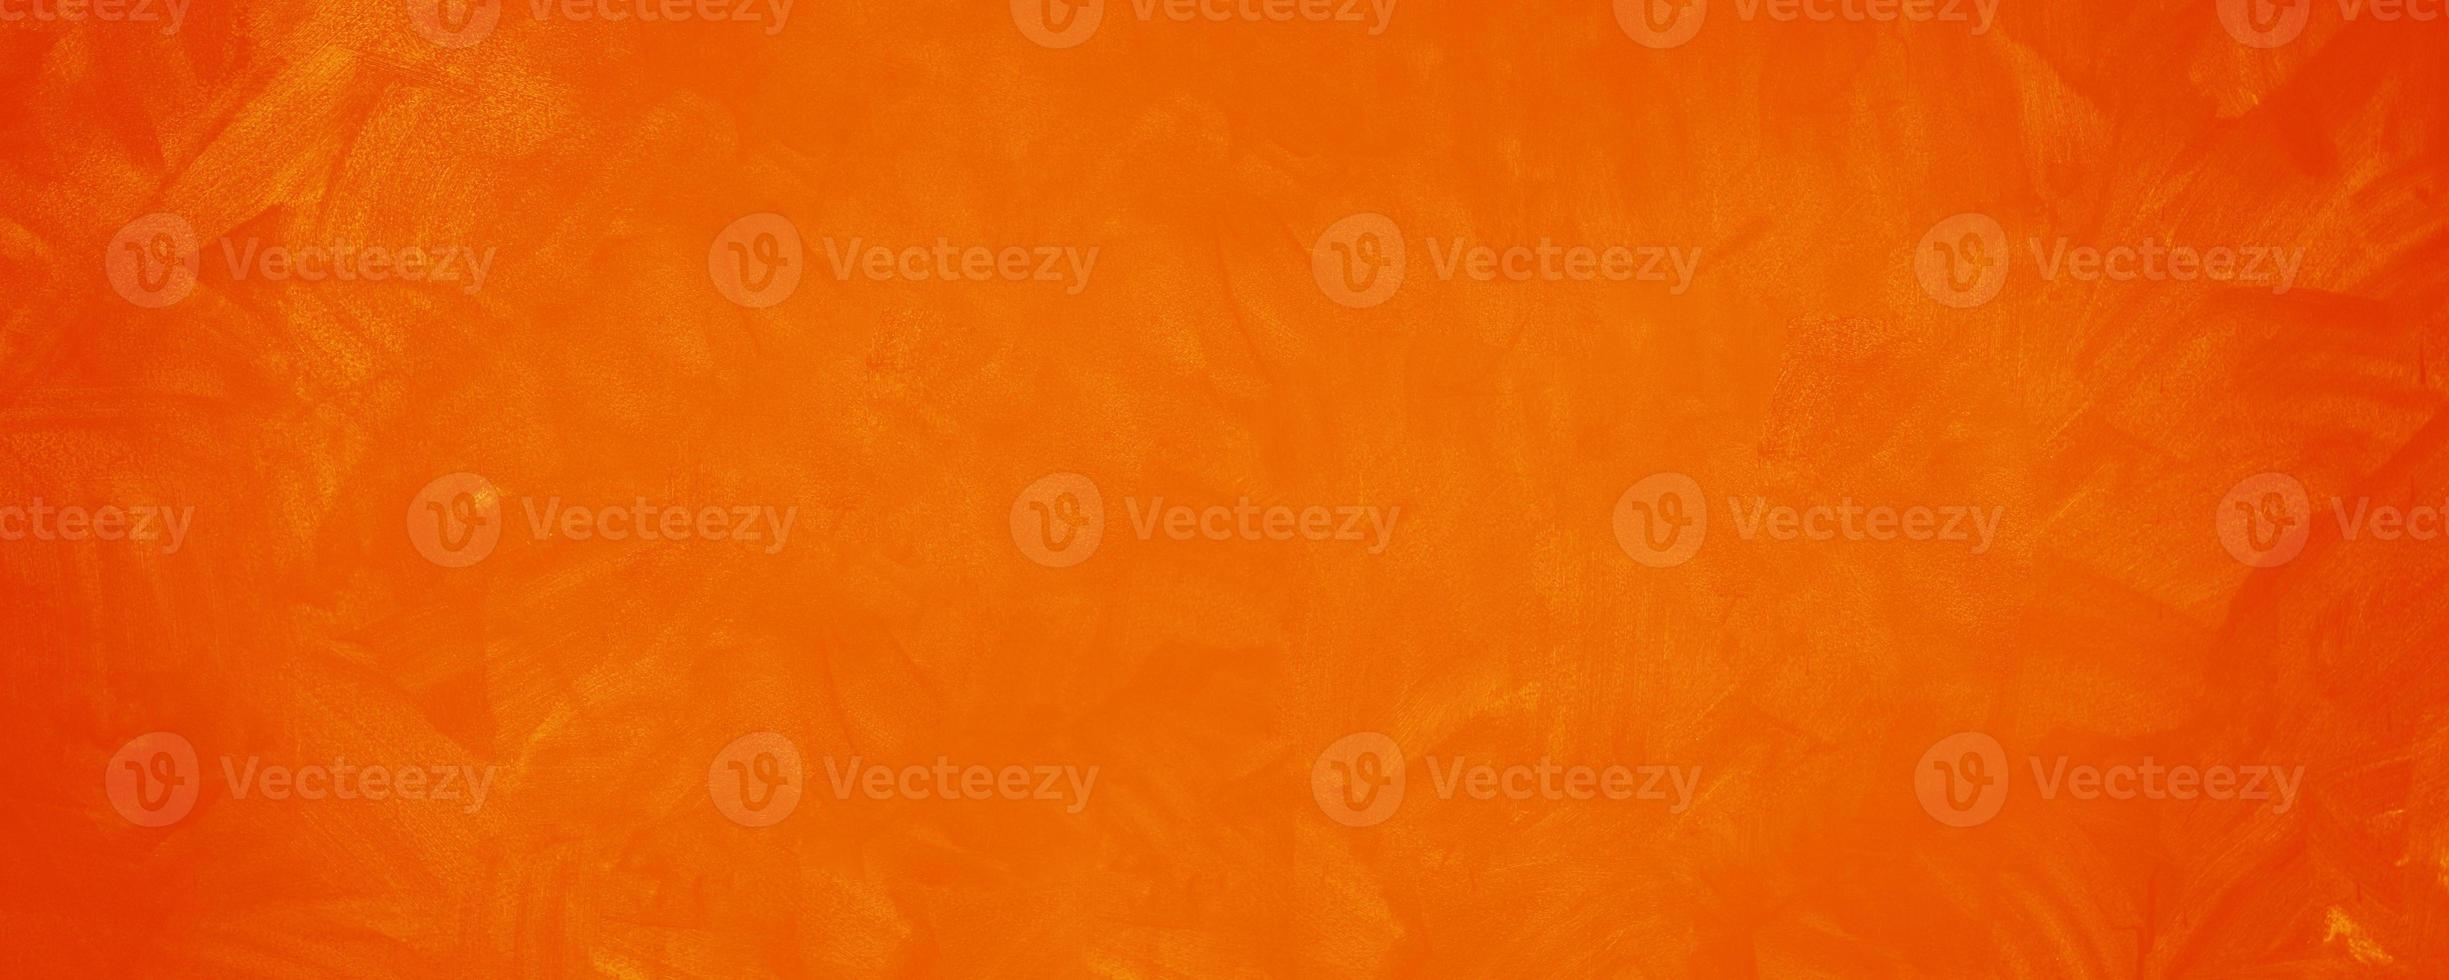 fundo de parede de textura de cimento laranja escuro foto